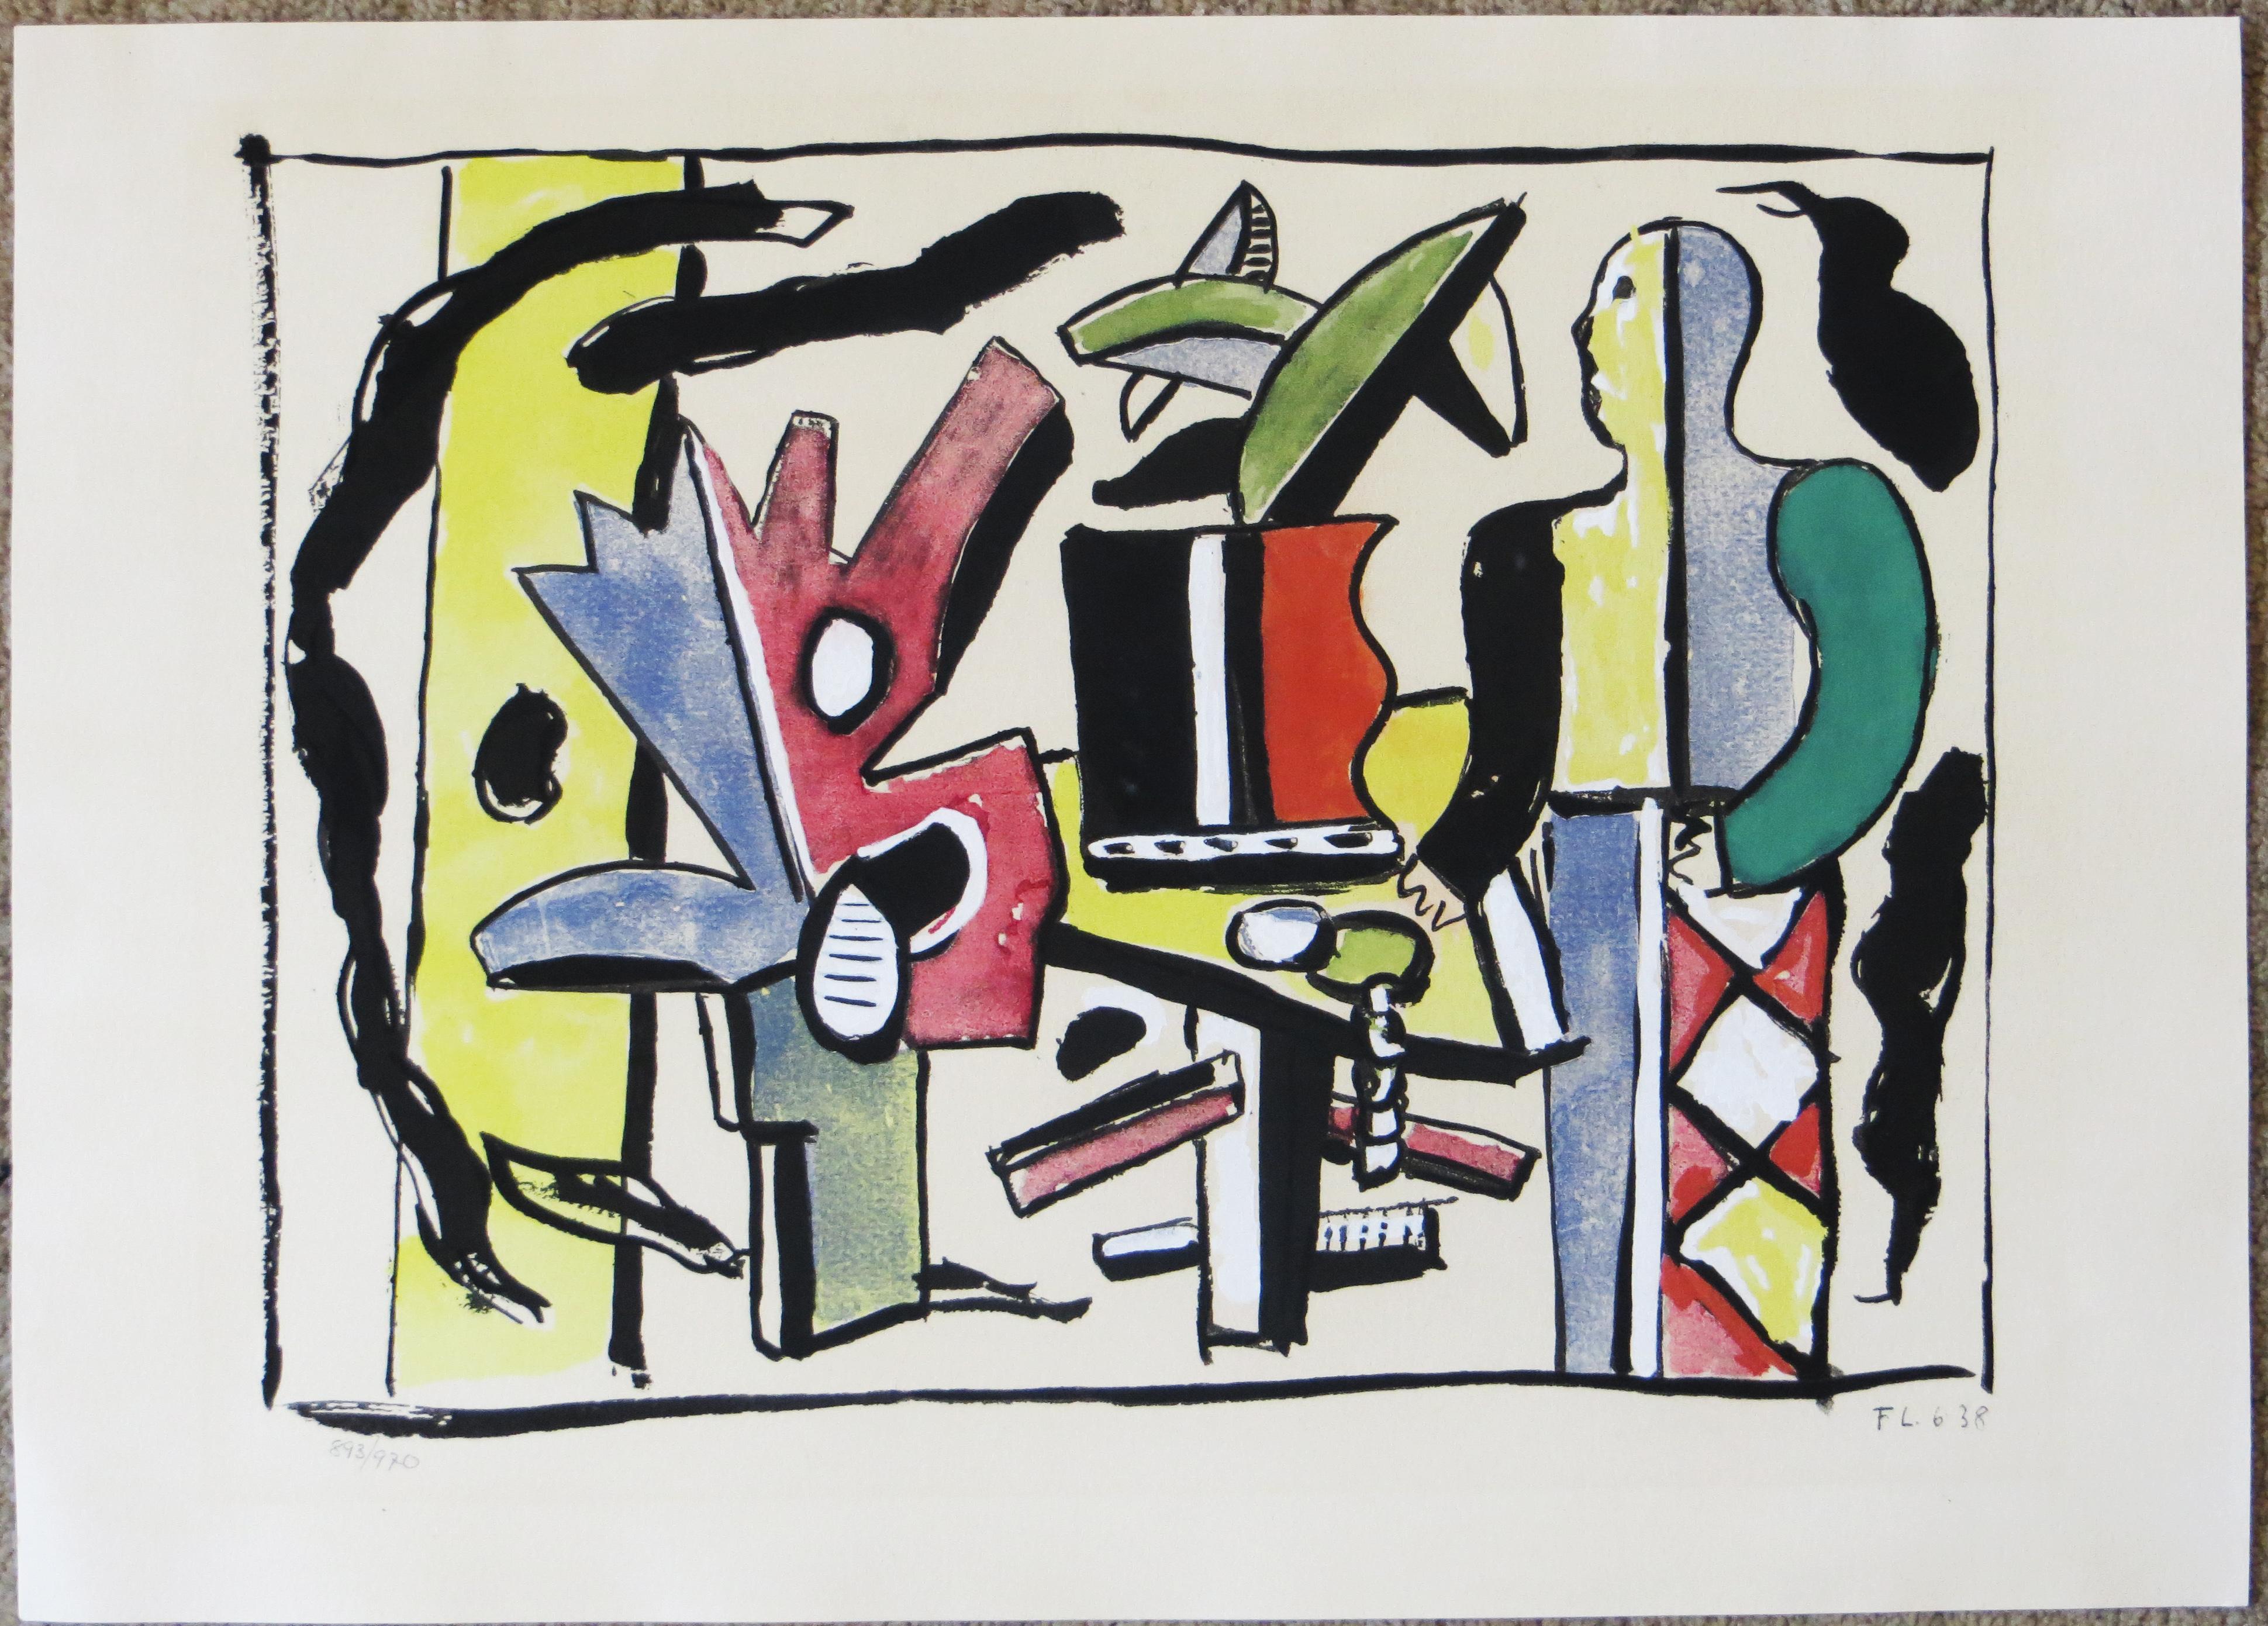 L'Artiste dans le Studio from Douze Contemporains - Abstract Print by (after) Fernand Léger